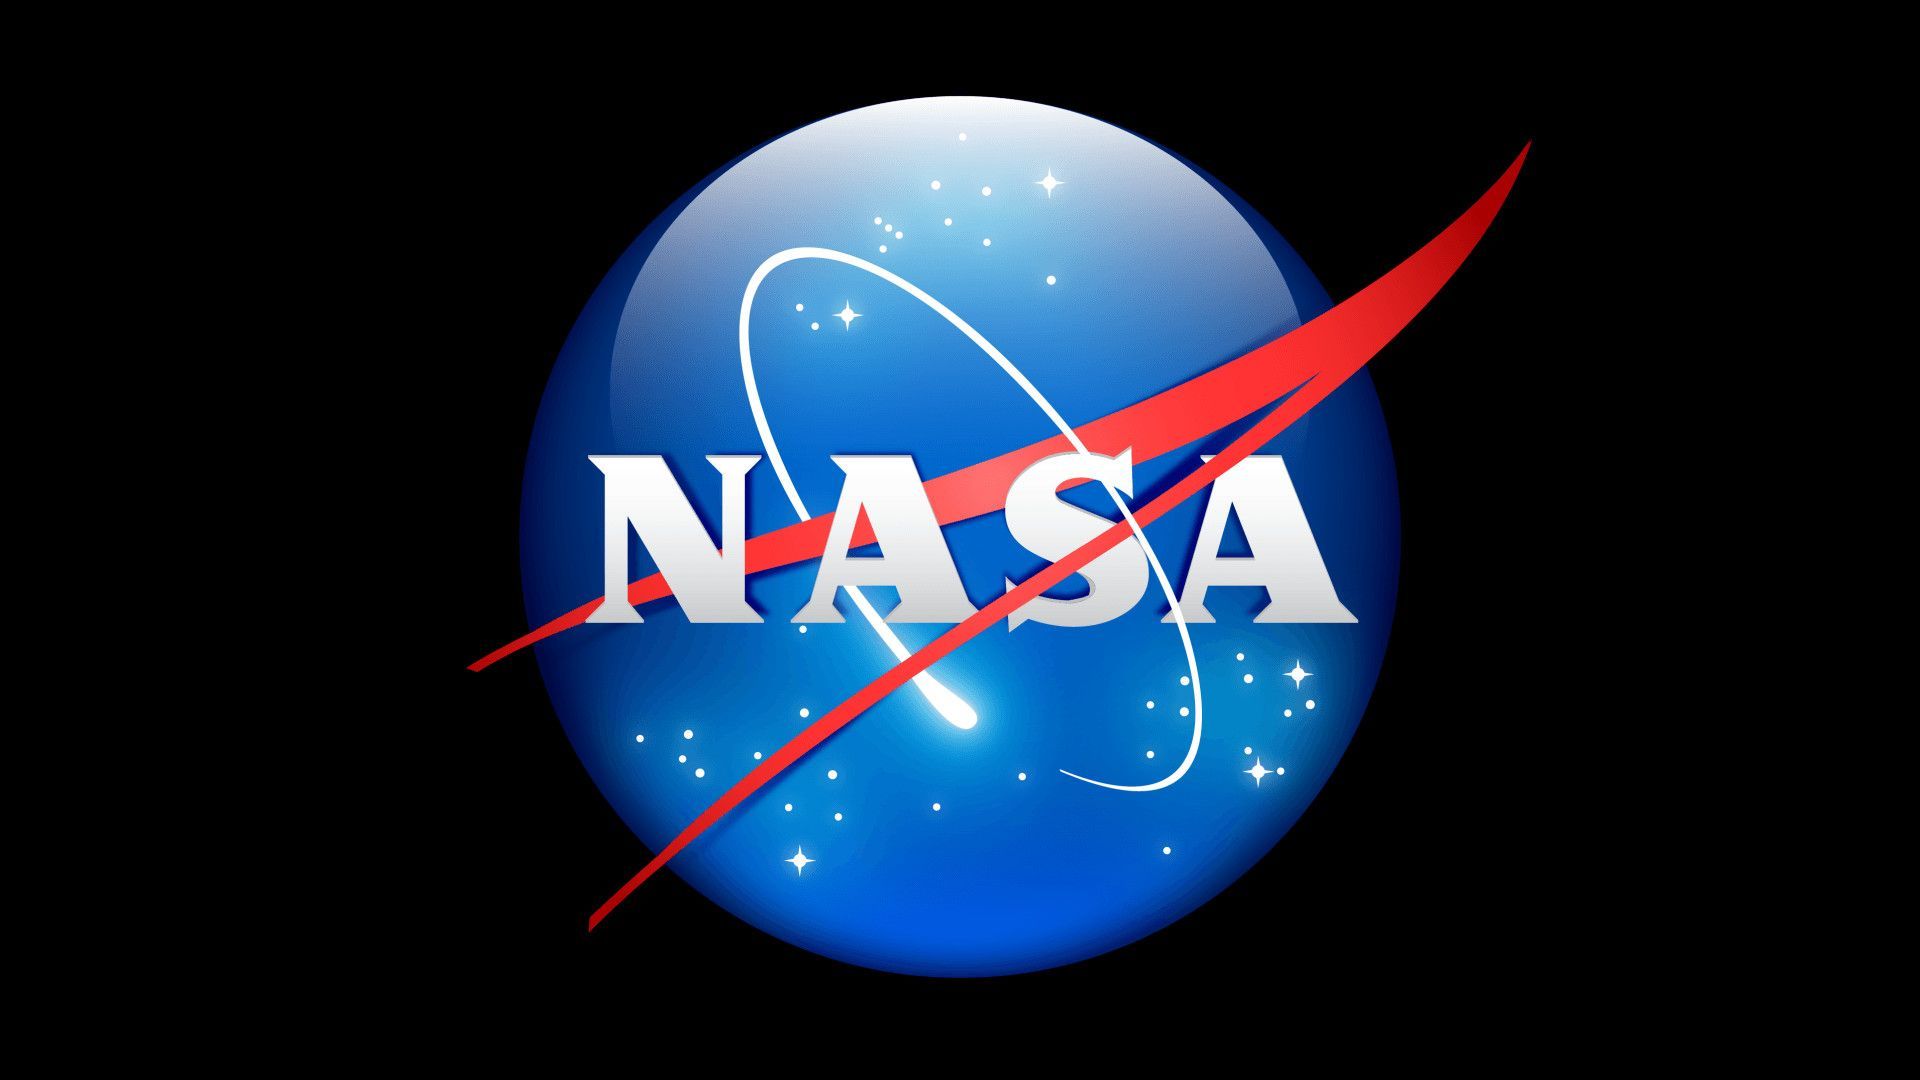 Nasa Logo Icons For Desktops